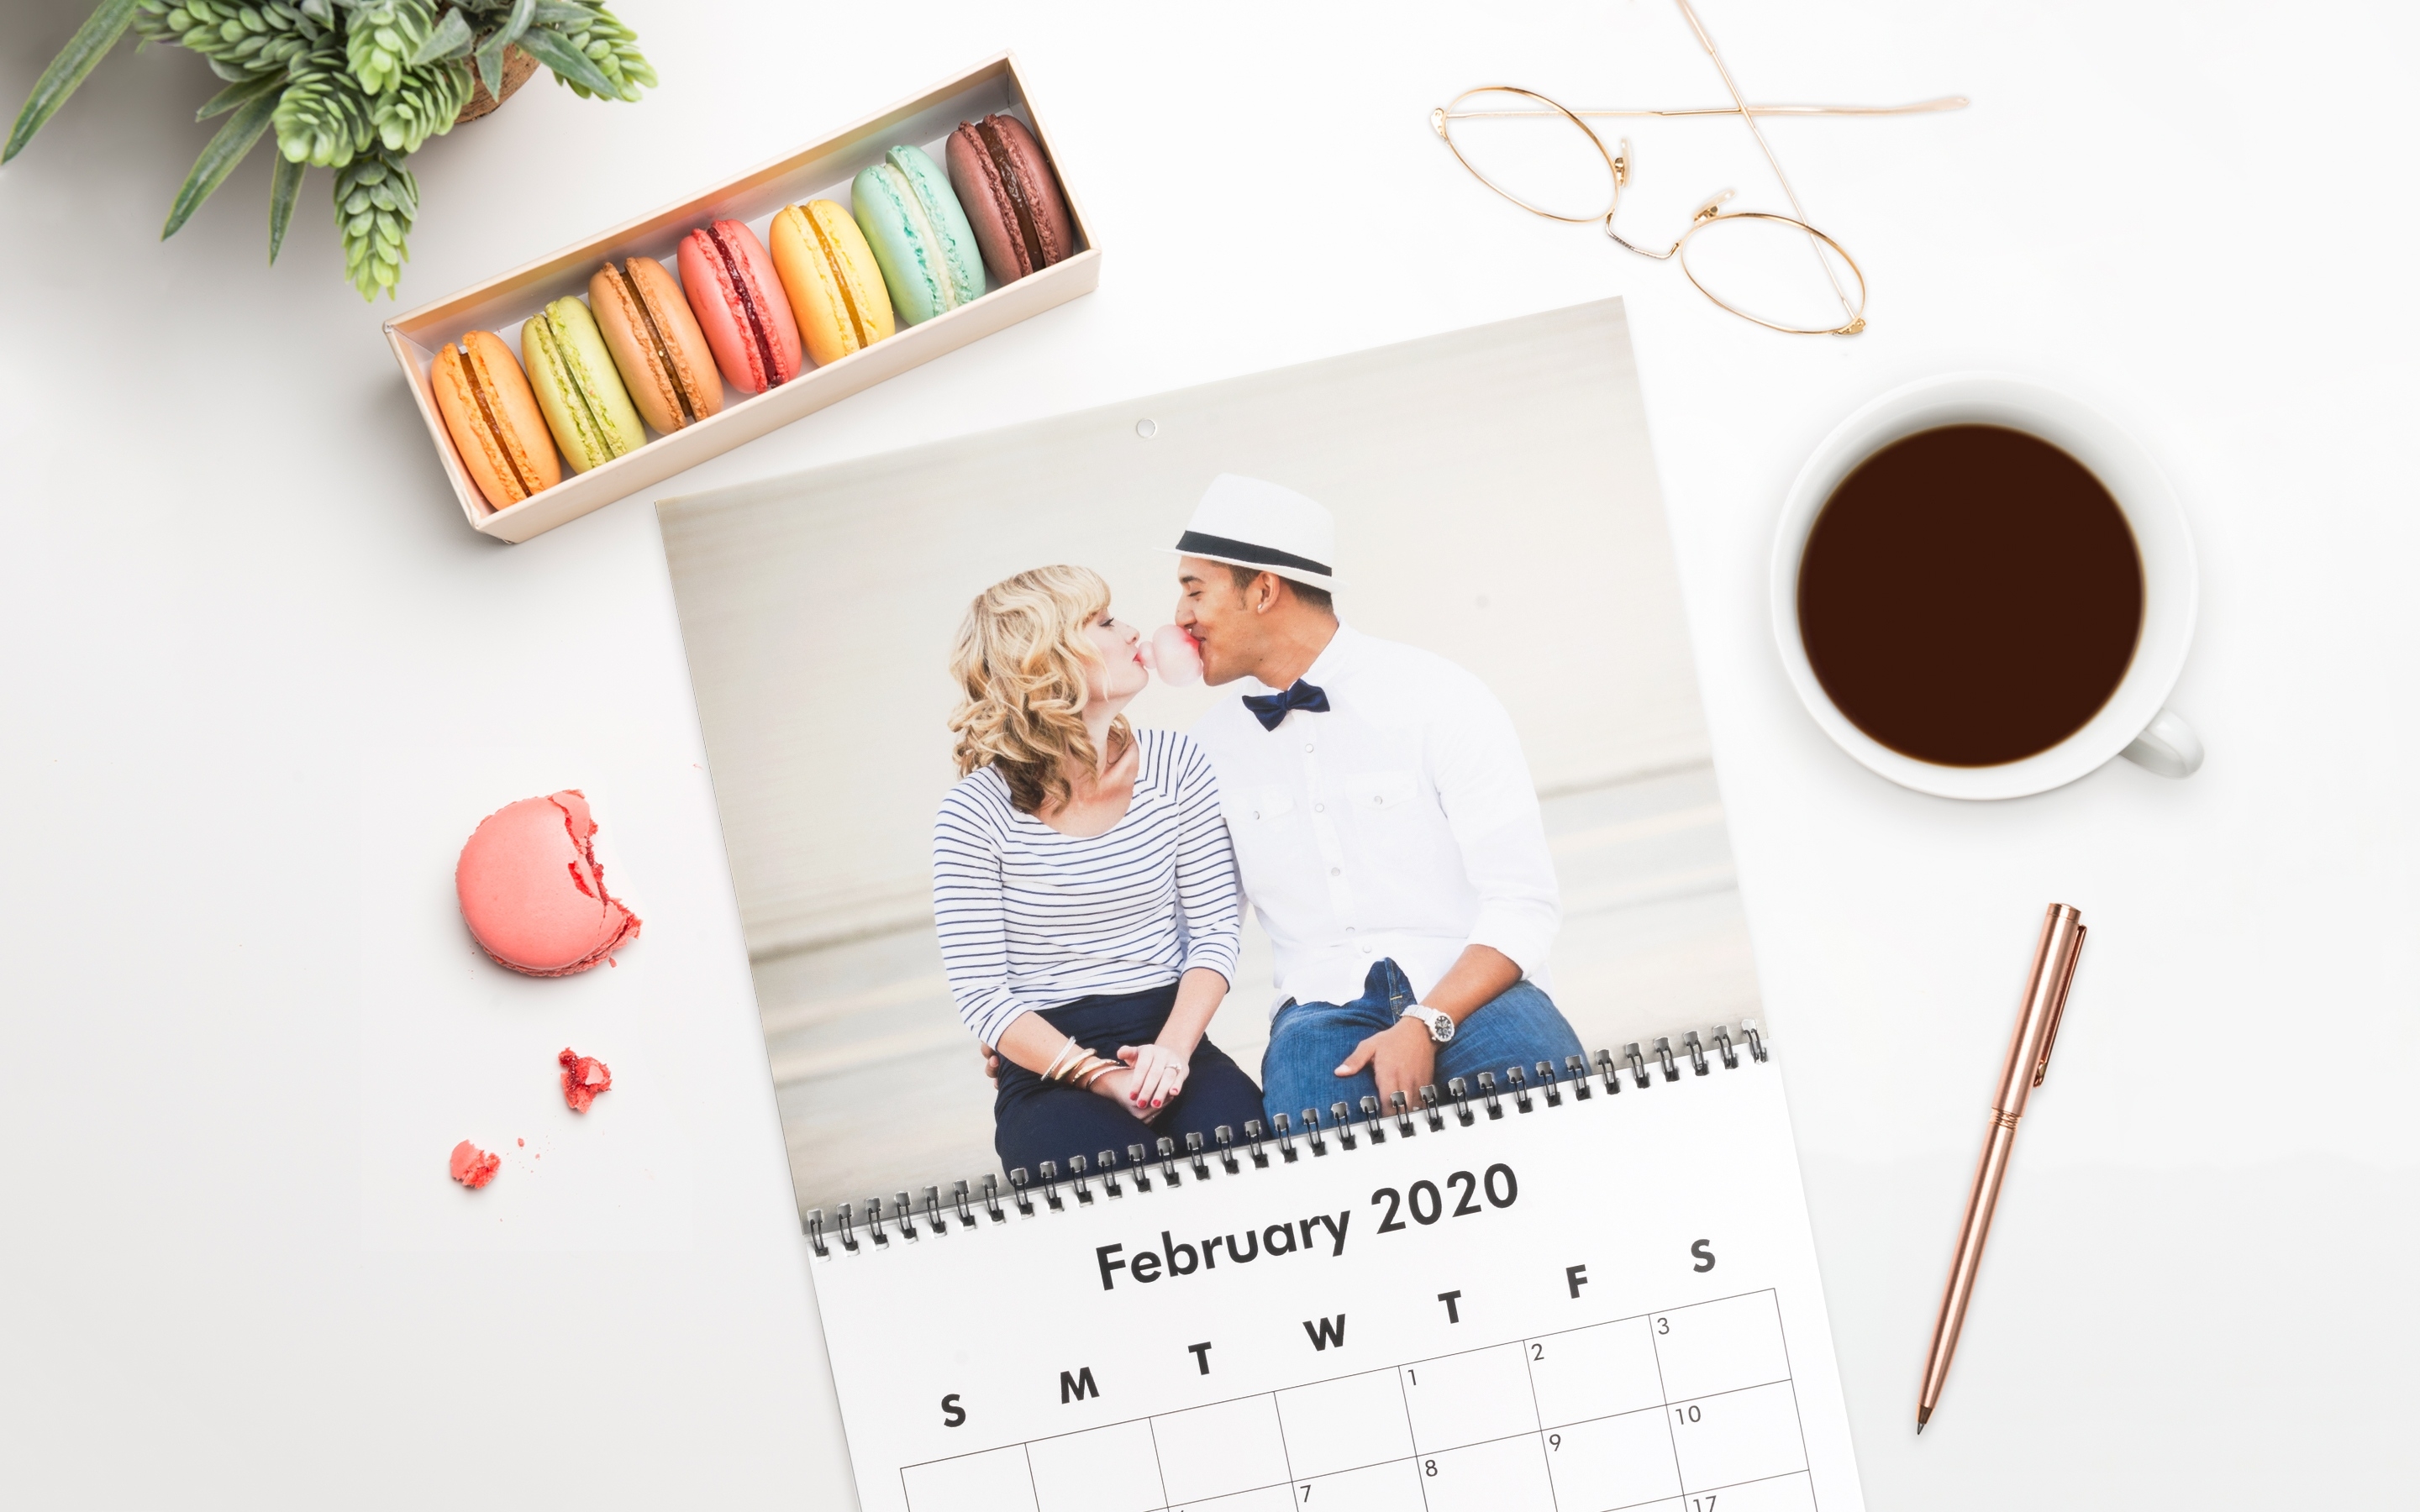 Custom Calendars | Create Your Own Photo Calendar | Collage Calendar Printing In Bulk